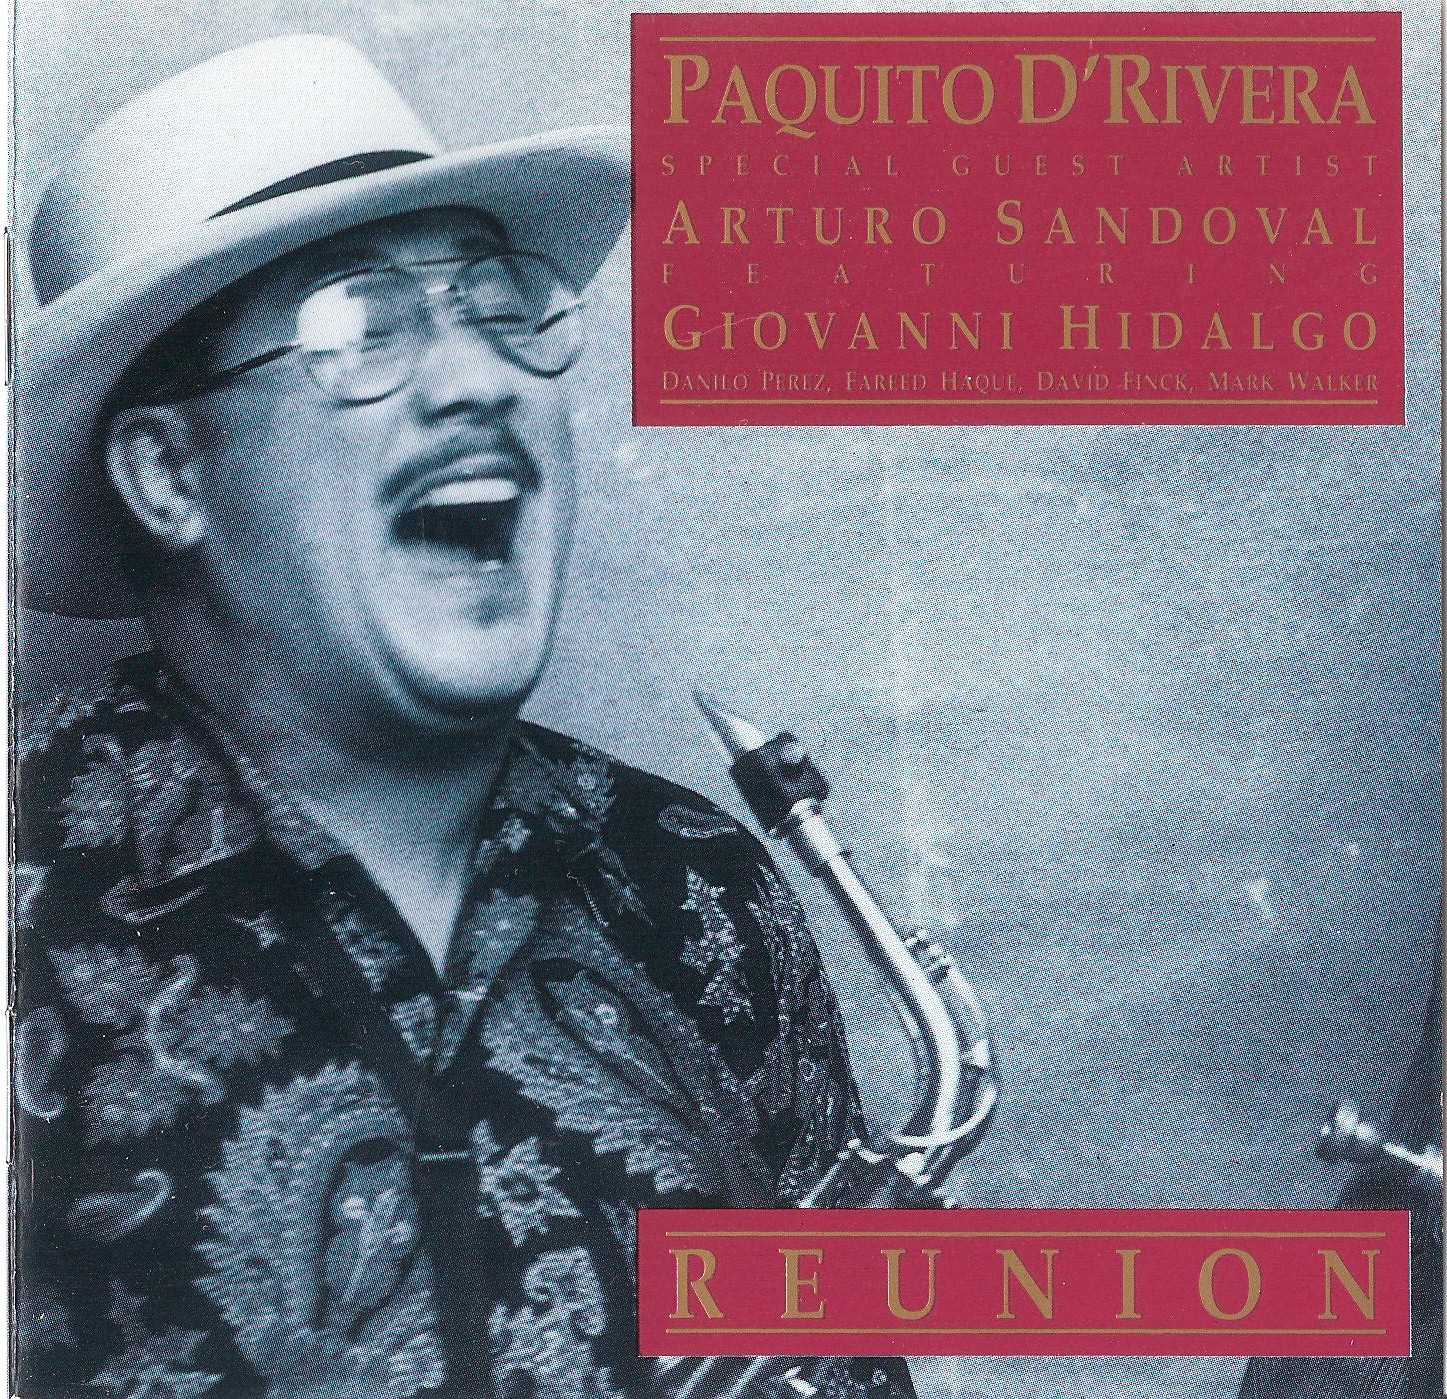 PAQUITO D'RIVERA - Reunion cover 